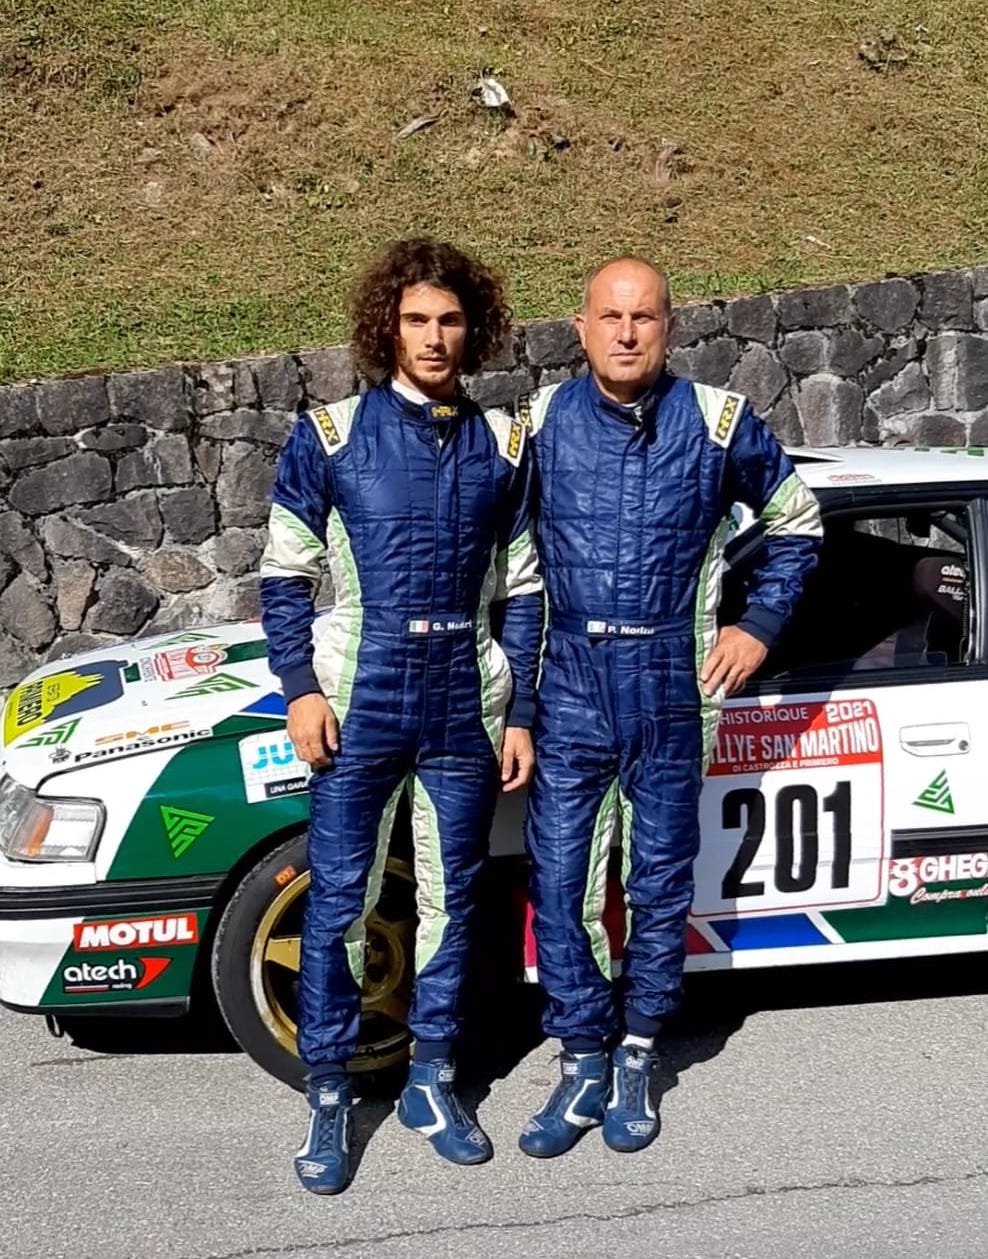 Paolo Nodari - Giulio Nodari, Historique Rallye San Martino 2021